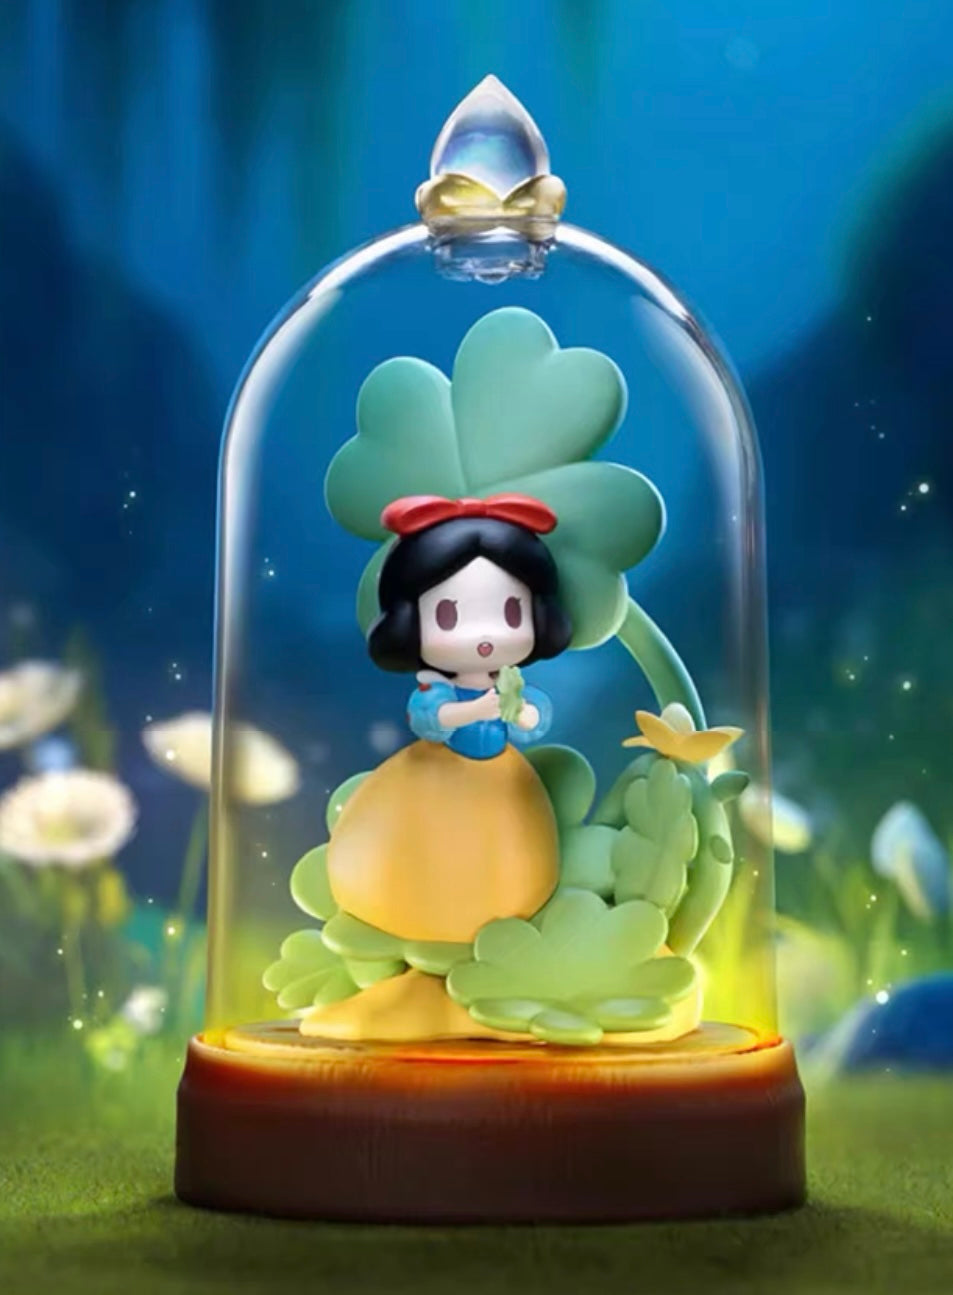 Disney princess flower and shadow